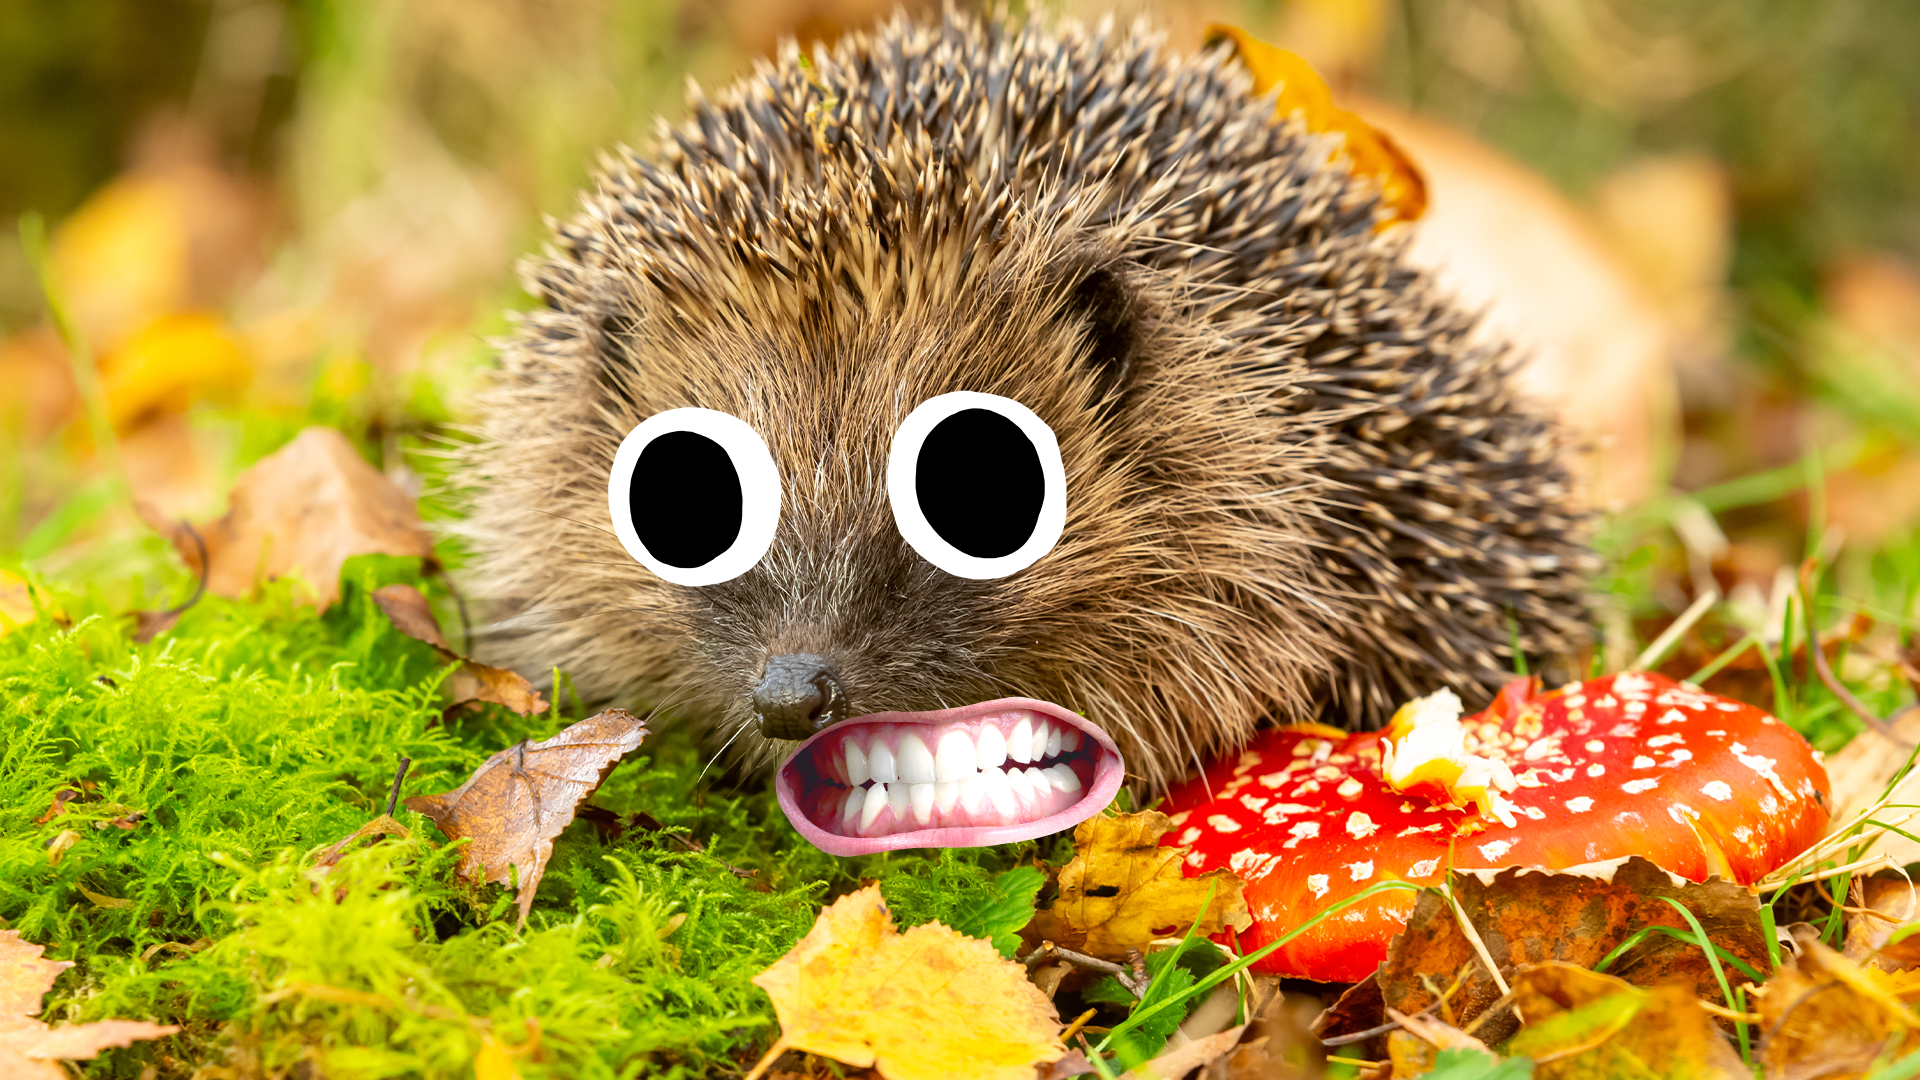 Goofy lil hedgehog